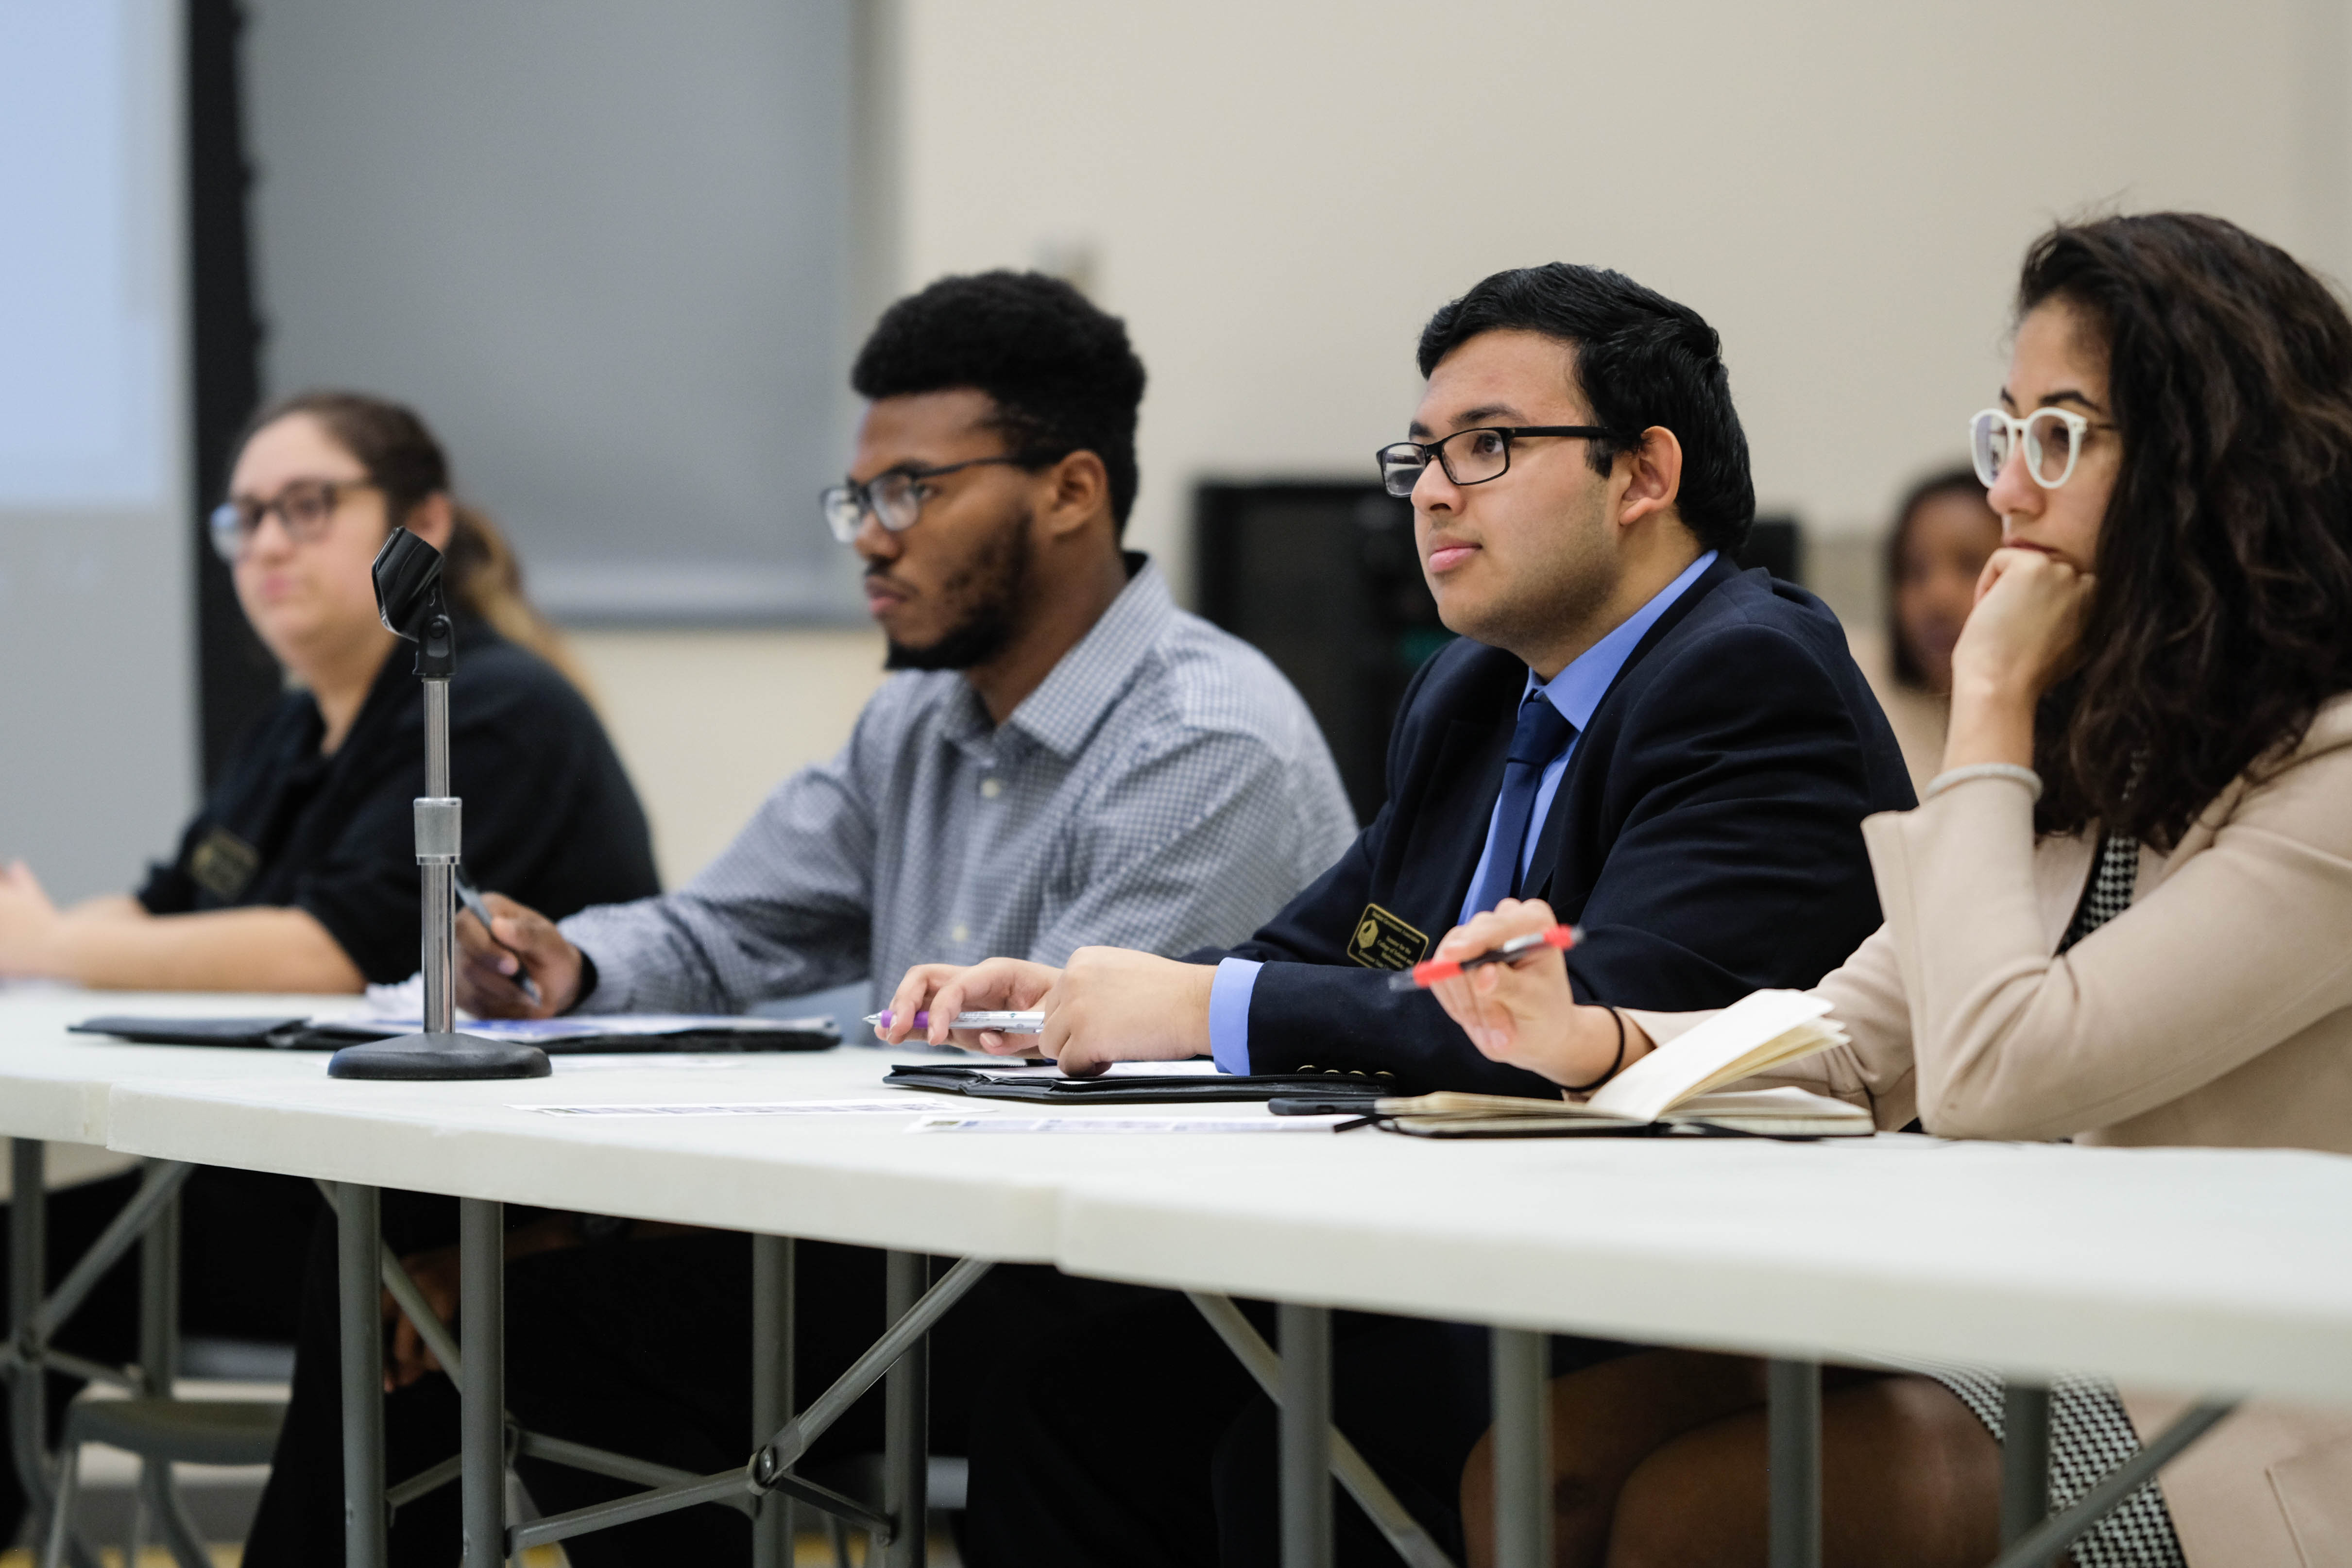 SGA invites activist student organization to discuss recent racial incidents